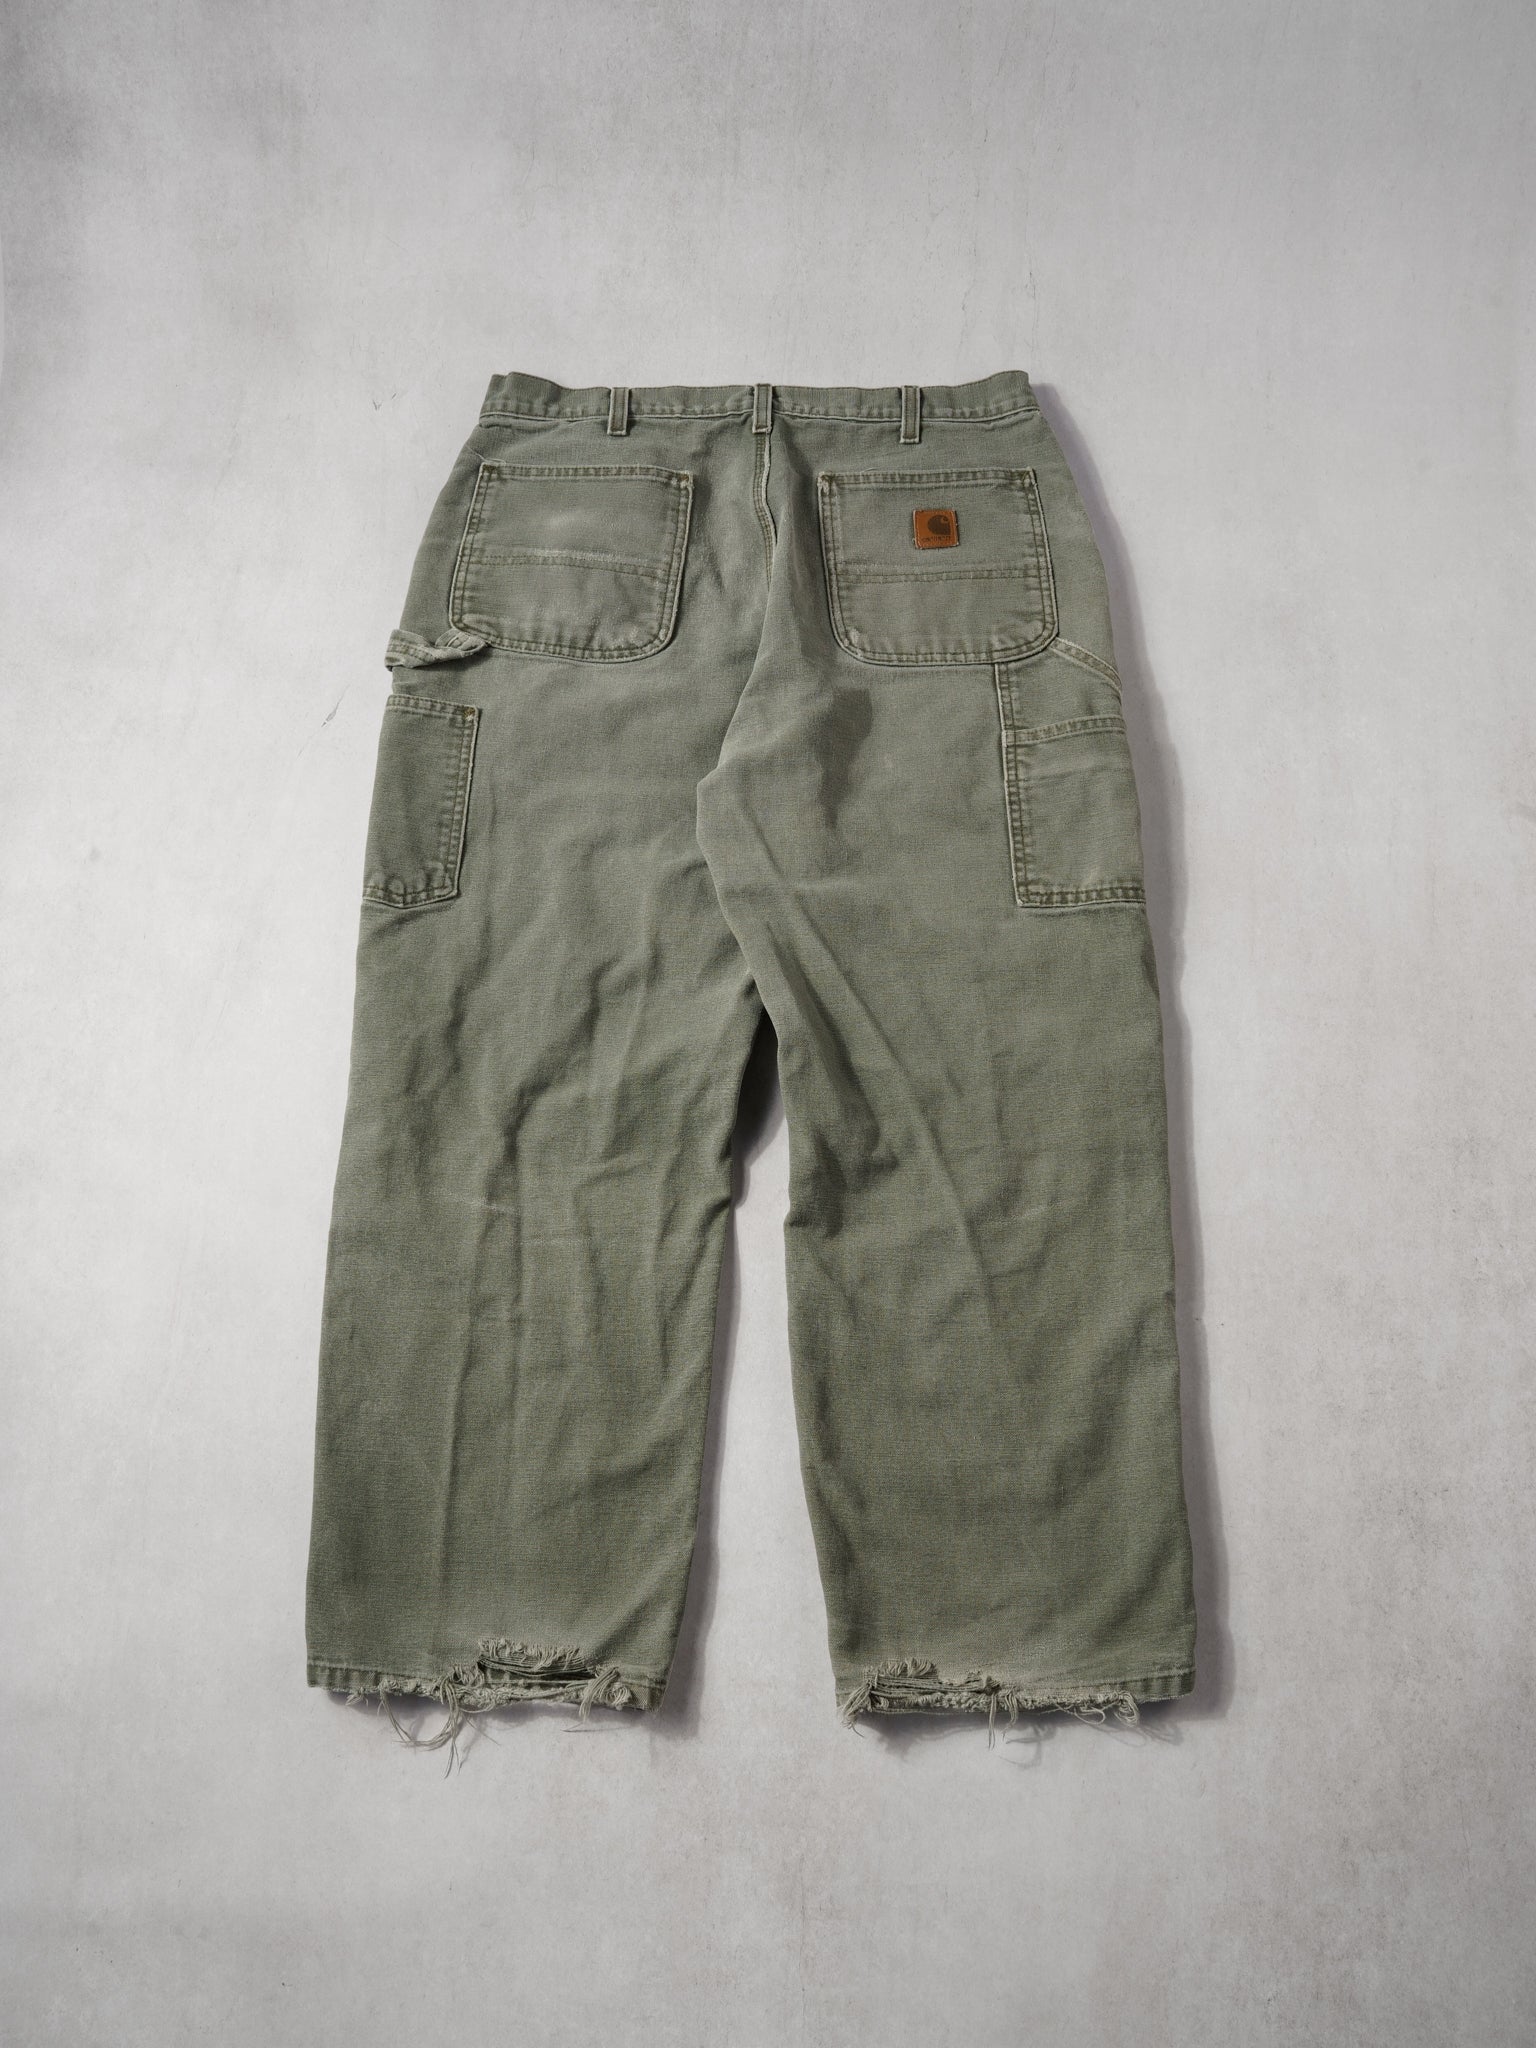 Vintage Washed Juniper Green Carhartt Dungeree Fit Carpenter Pants (34x29)